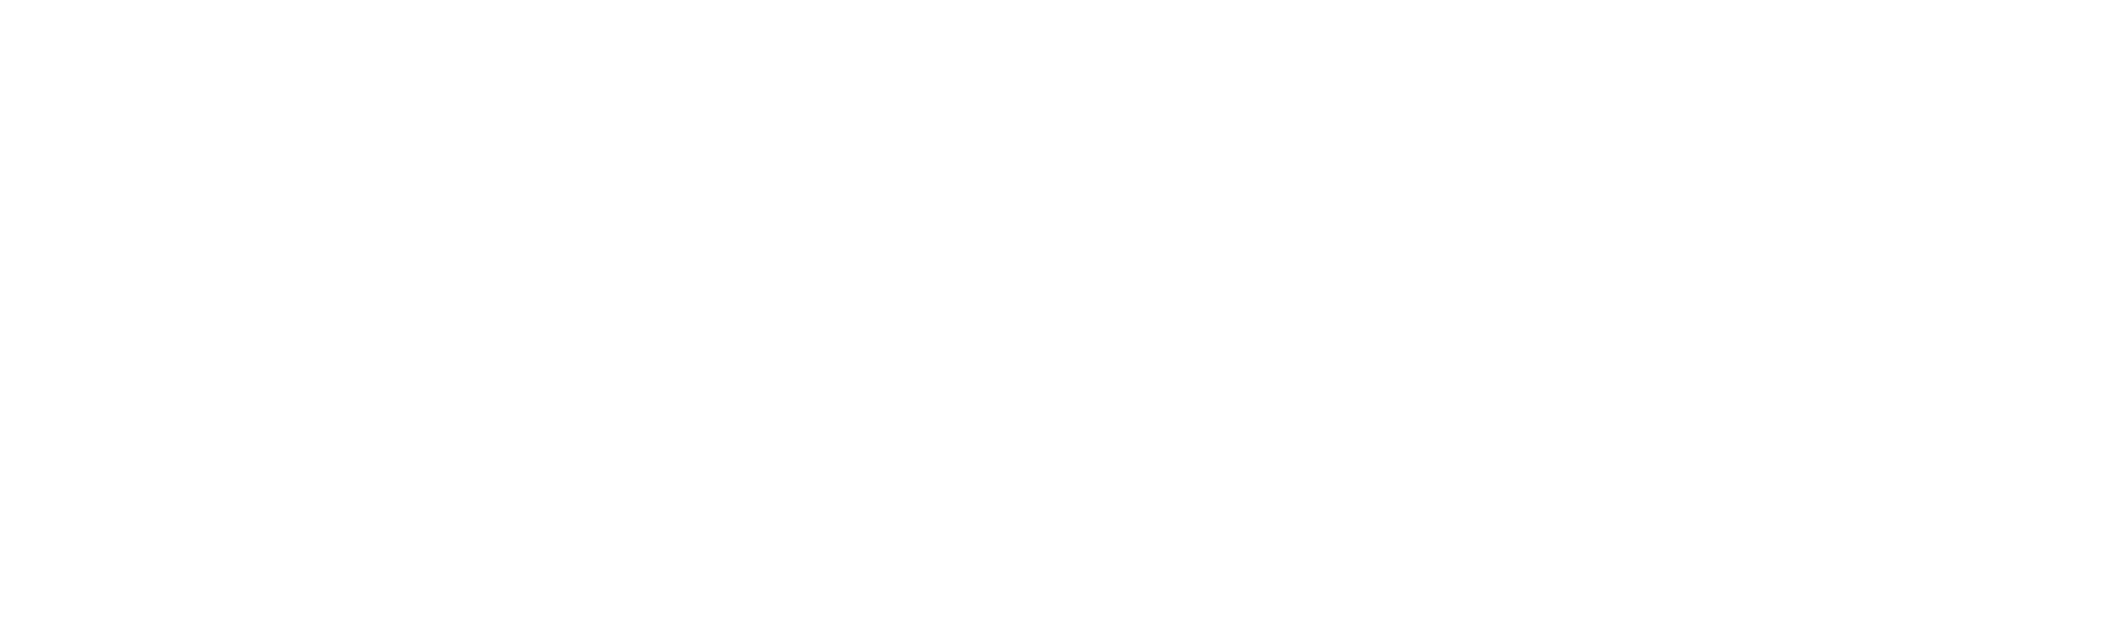 ProEdge-logo-1c-white.png